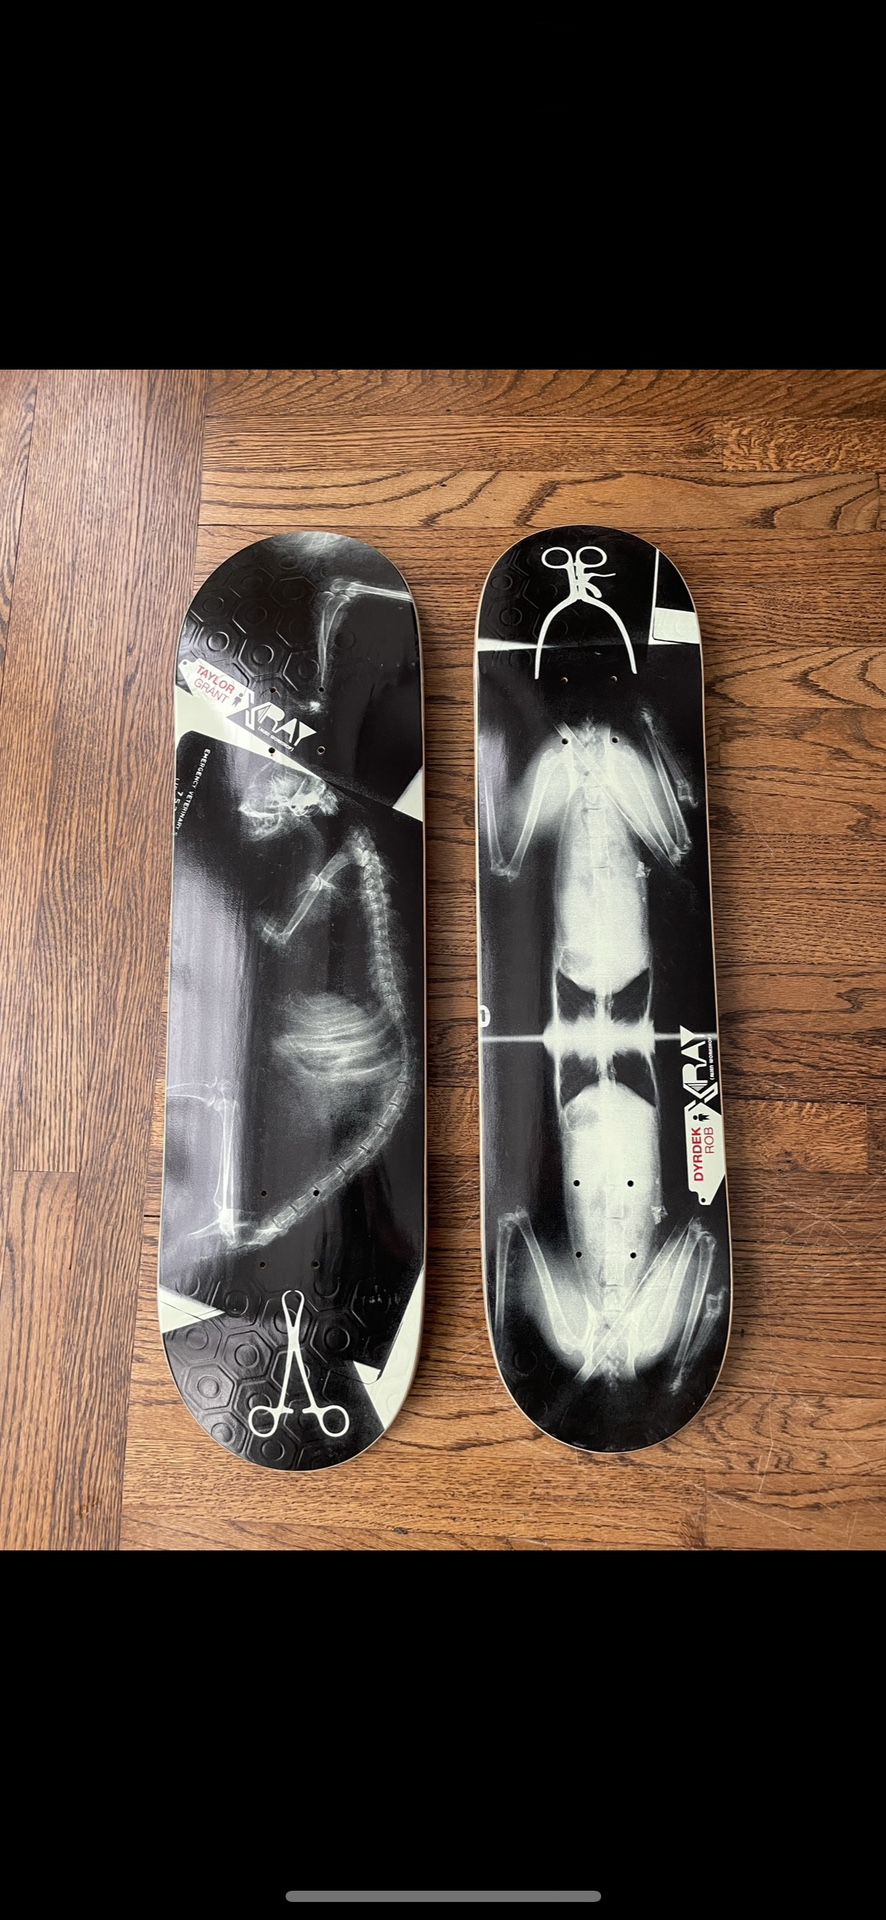 Alien Workshop X-Ray Skateboards: Dyrdek and Grant Taylor